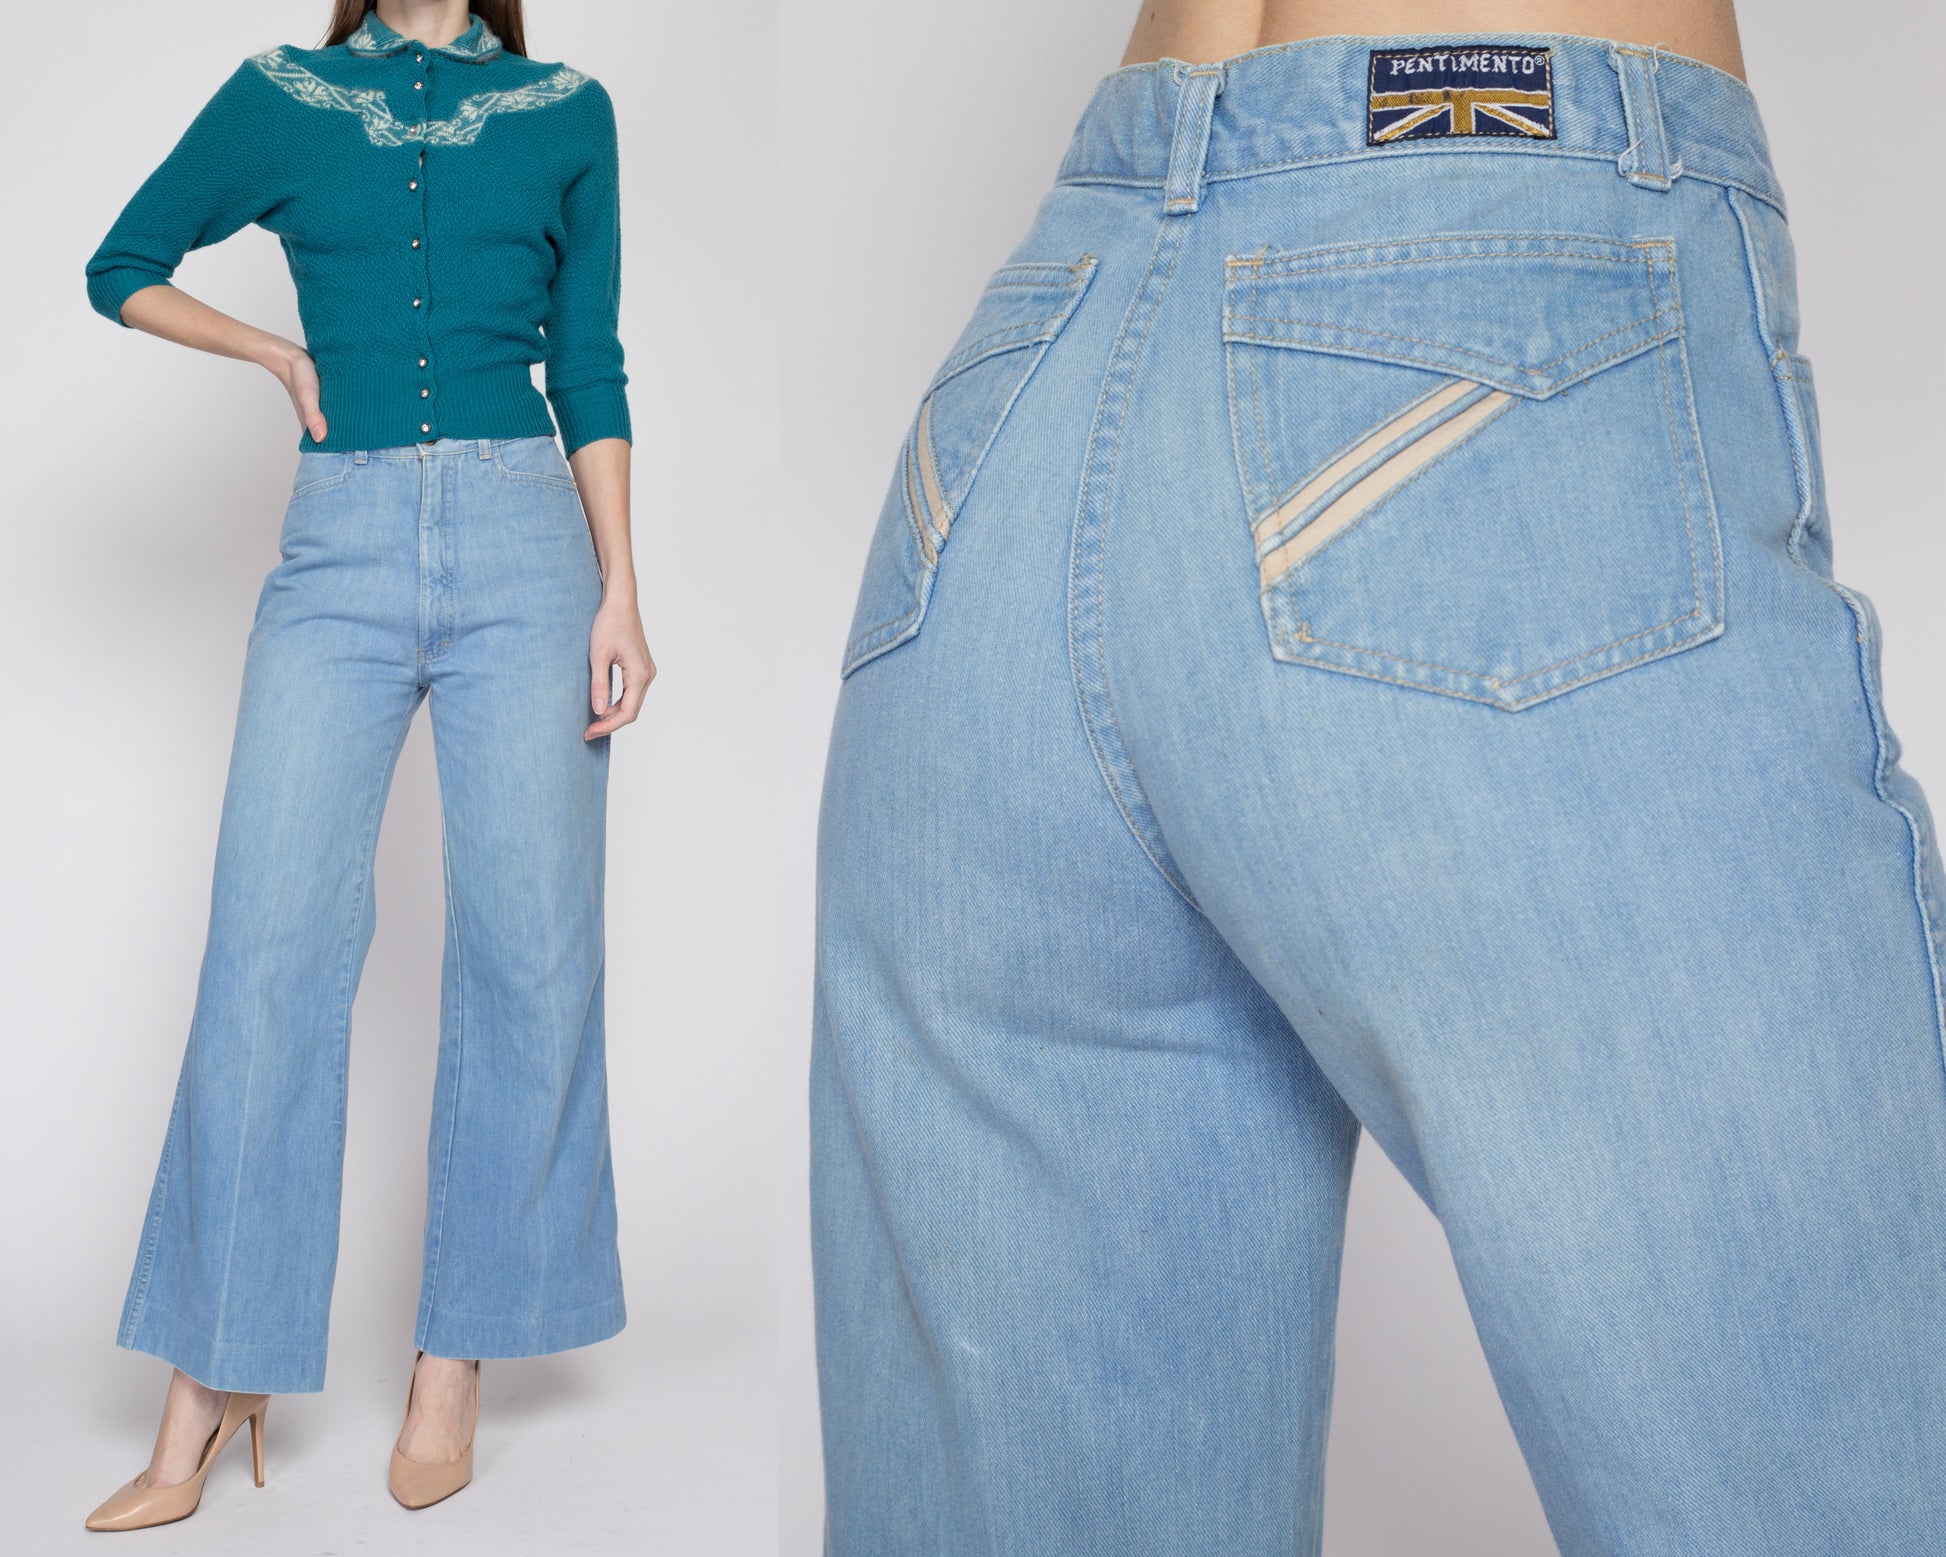 Vintage Patched Hippie Denim Seafarer Jeans - Front